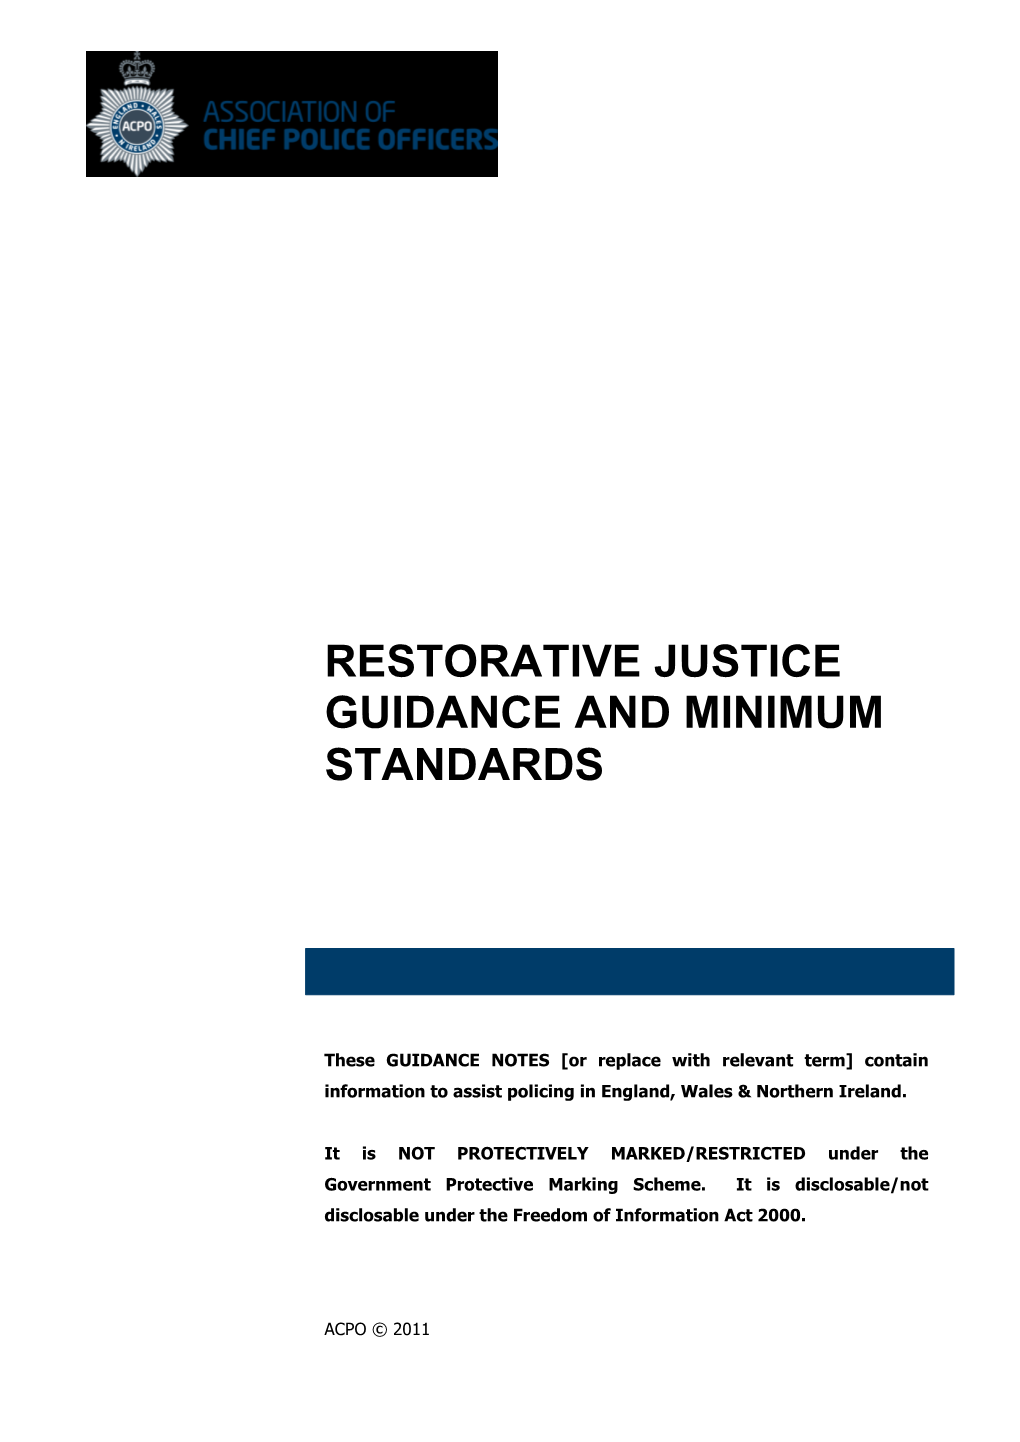 ACPO Restorative Justice Guidance and Minimum Standards